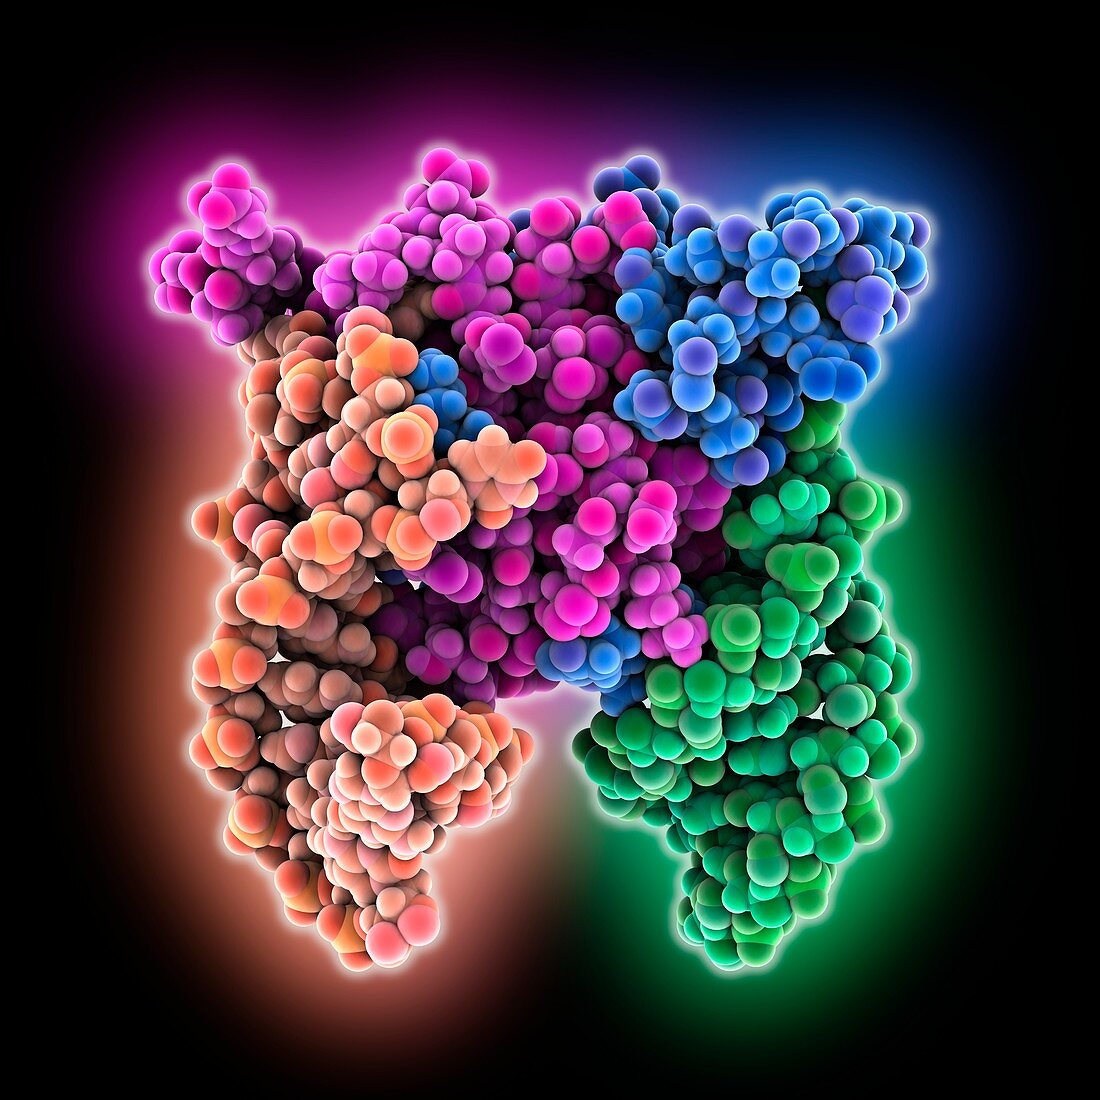 RNA carbon storage regulator complex